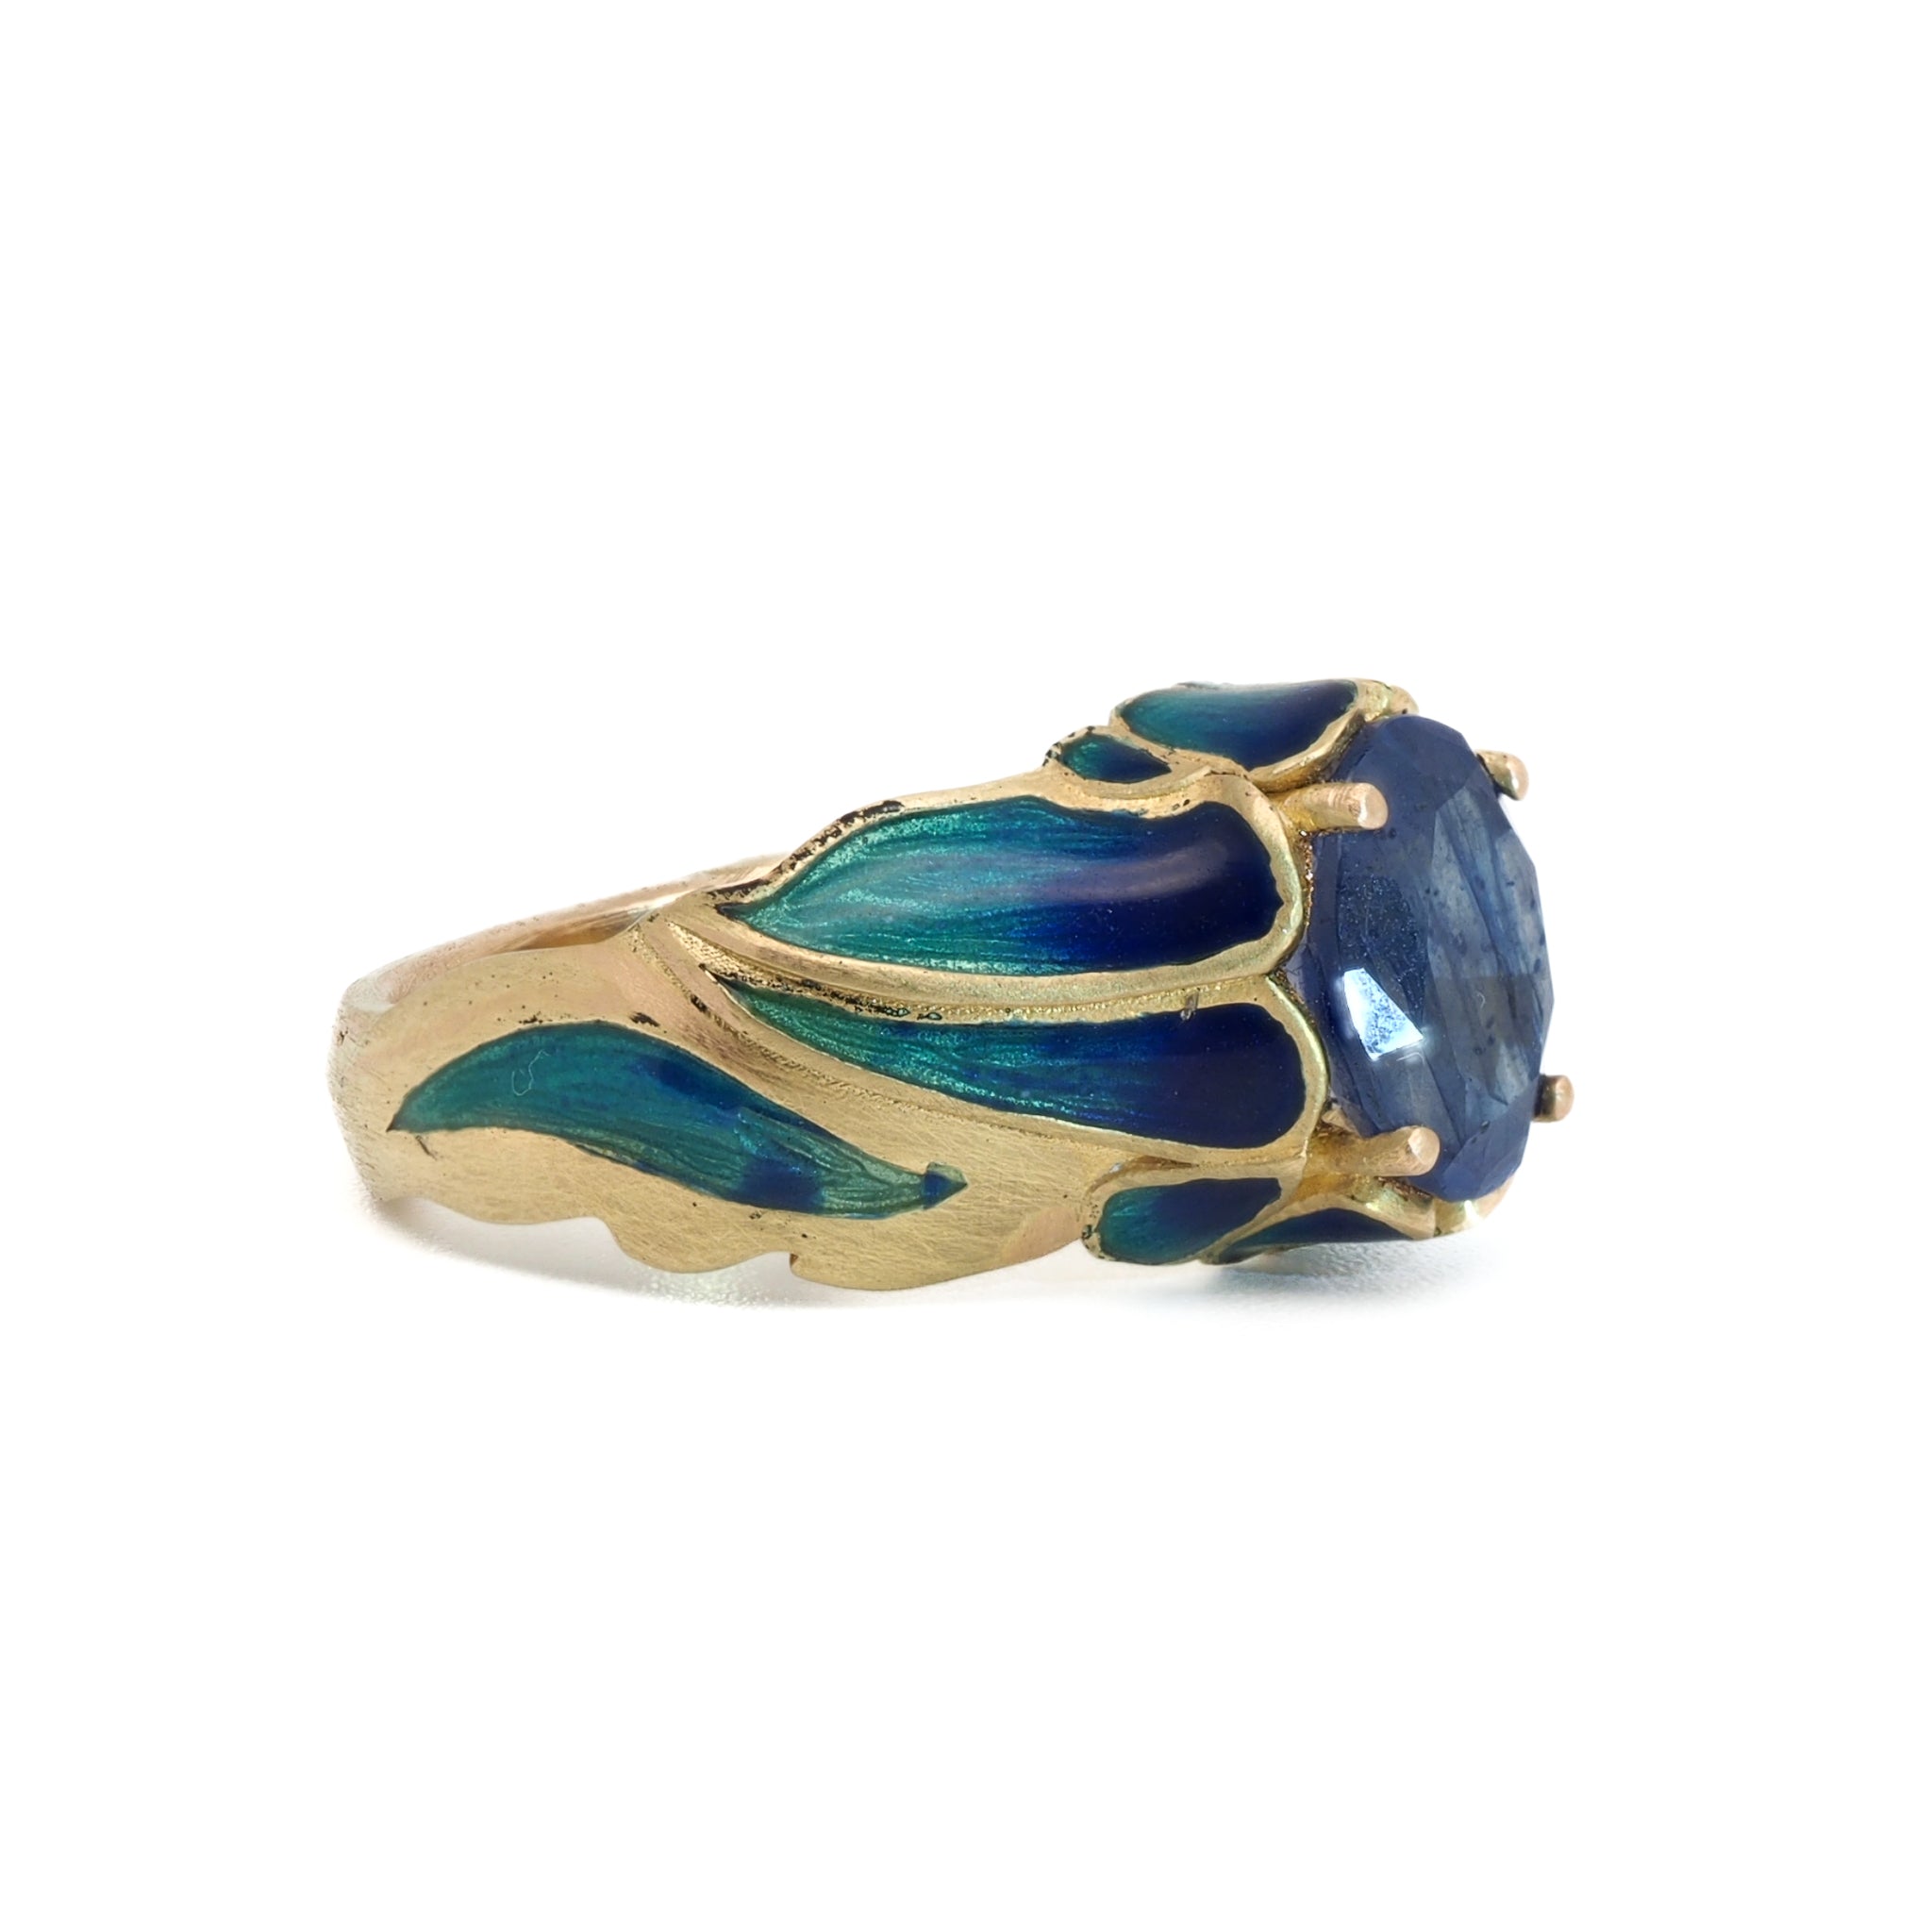 Handmade Fine Jewelry - 18k Gold Ring with a stunning Sapphire gemstone.